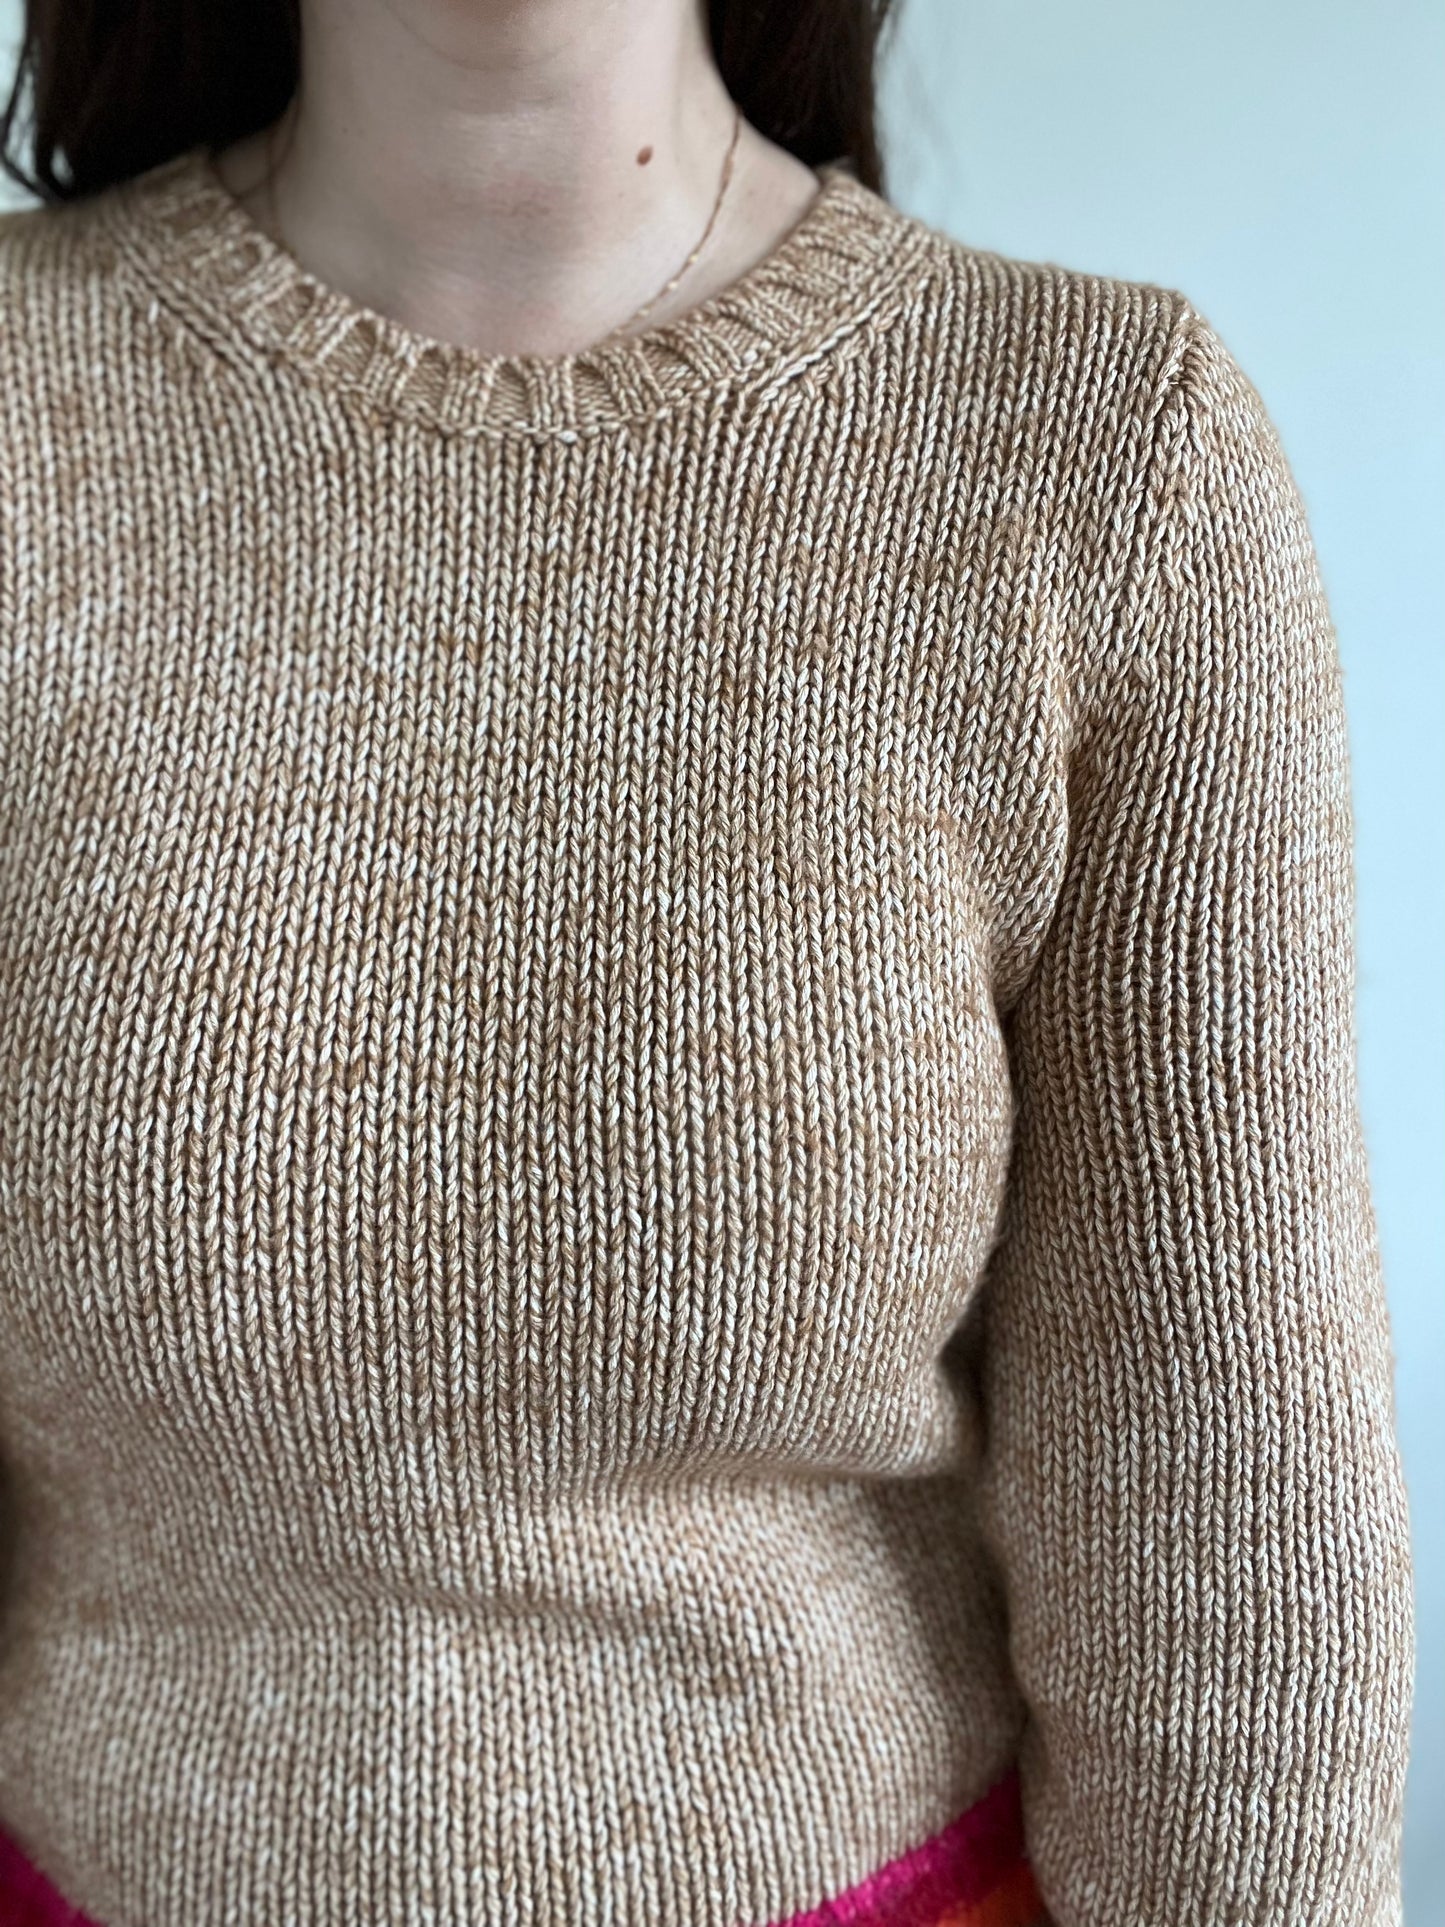 Brown & Multicolour Knit Sweater - S